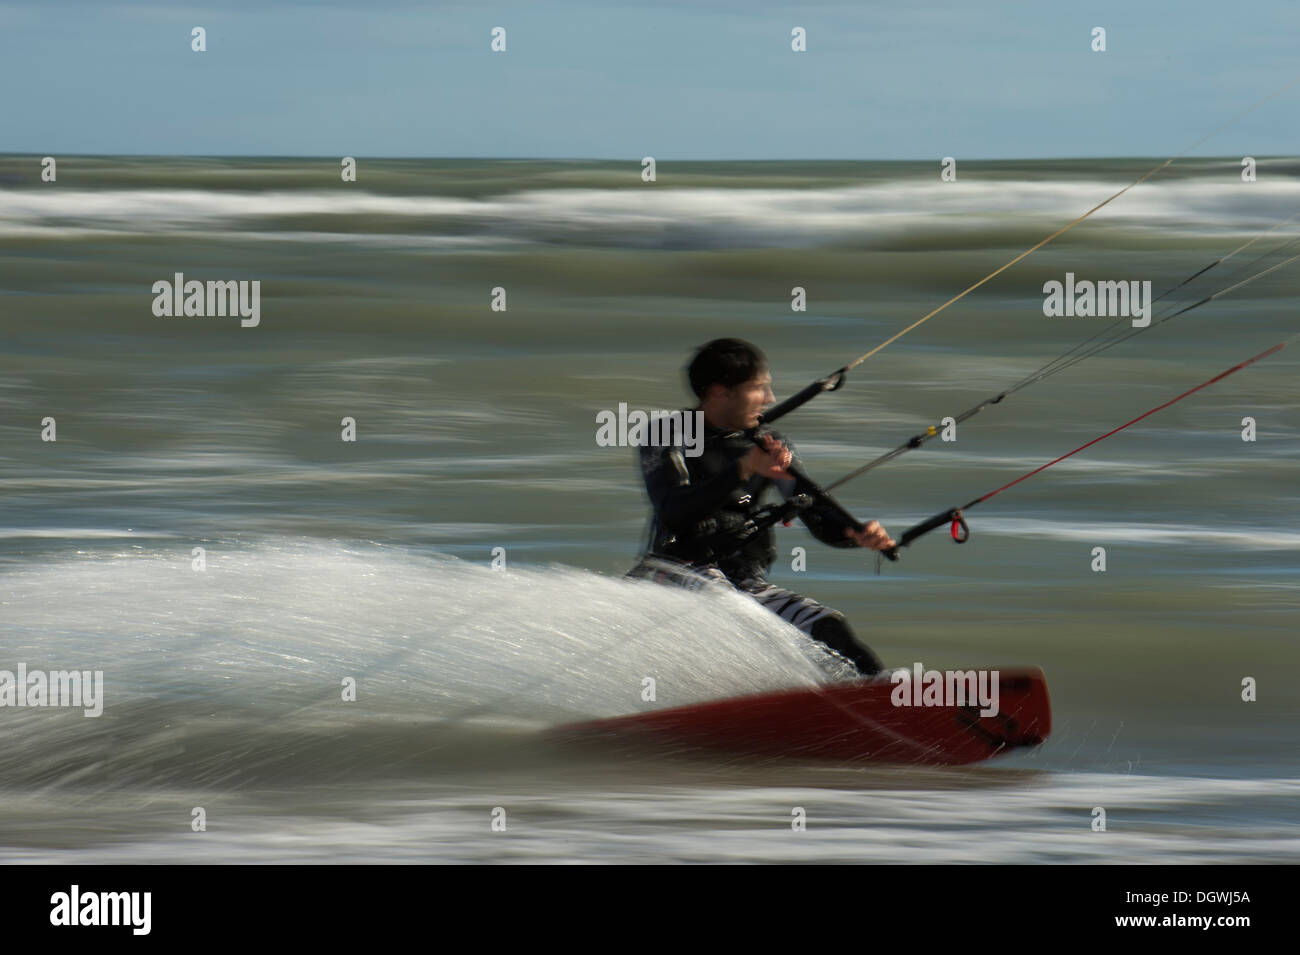 Kitesurfer cavalcando le onde panning shoot Foto Stock